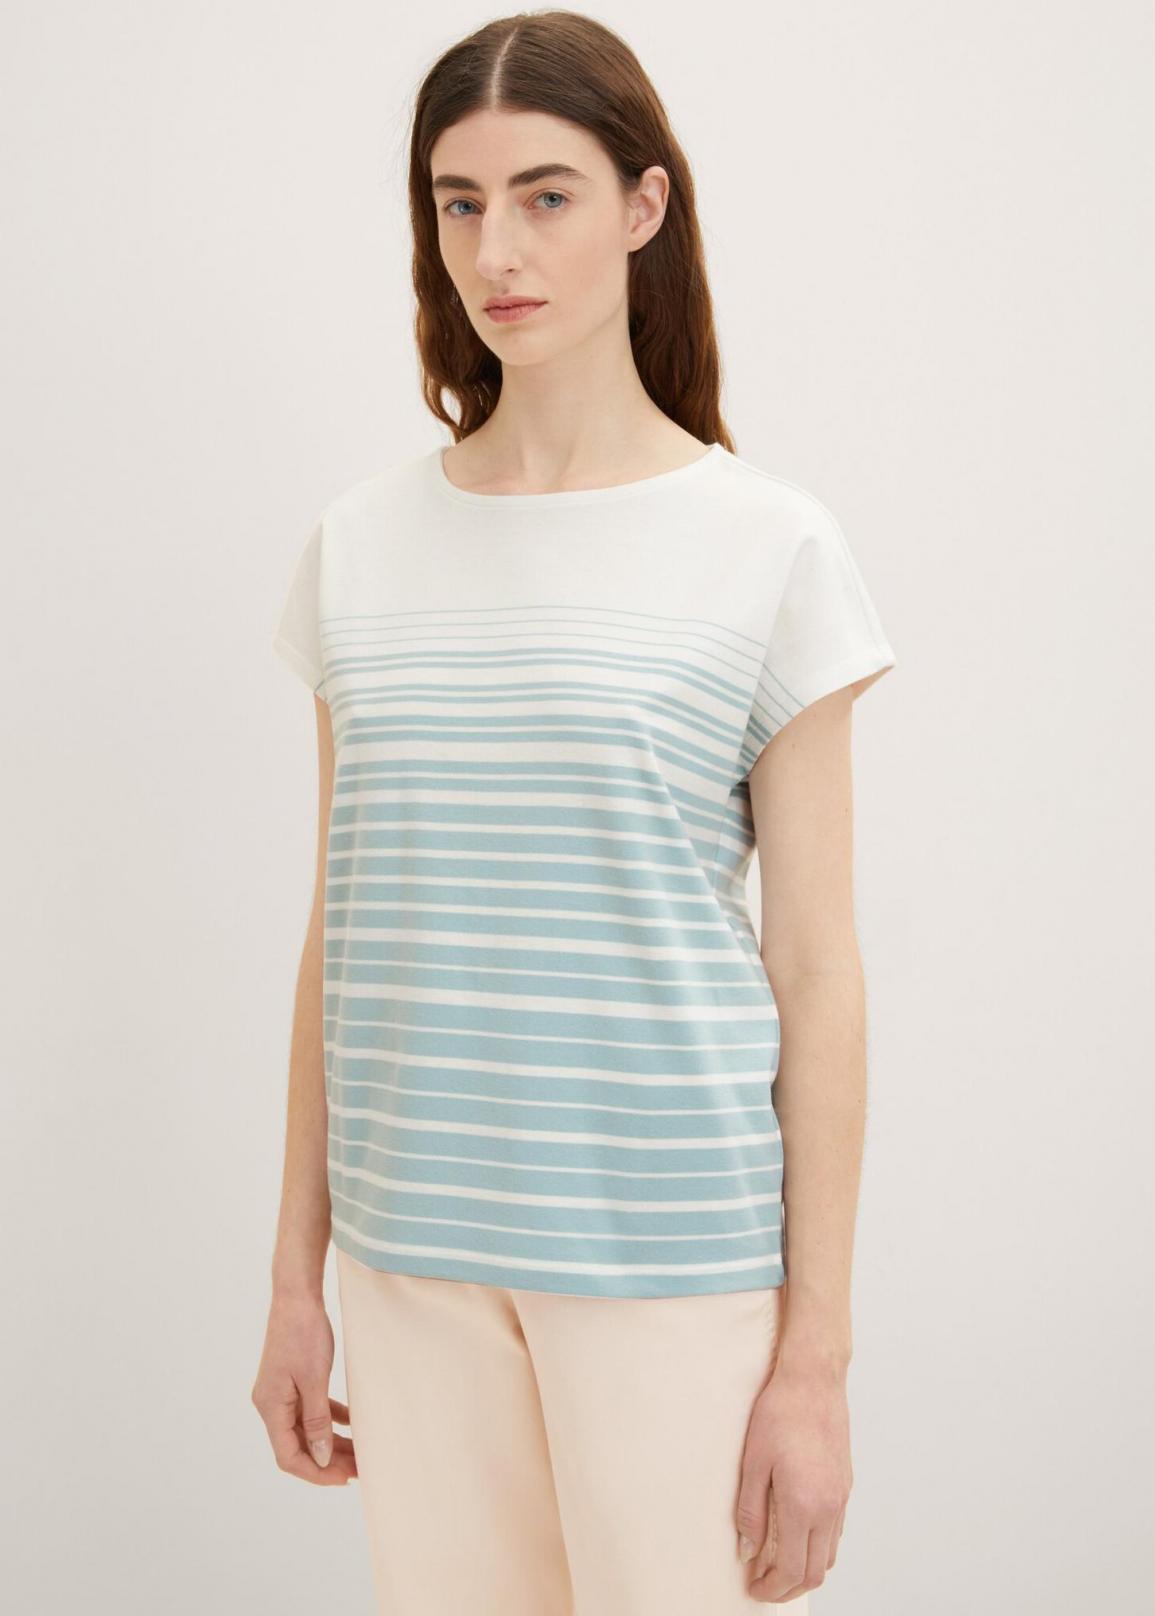 Tom Tailor® Tshirt - Blue Gradient Stripe